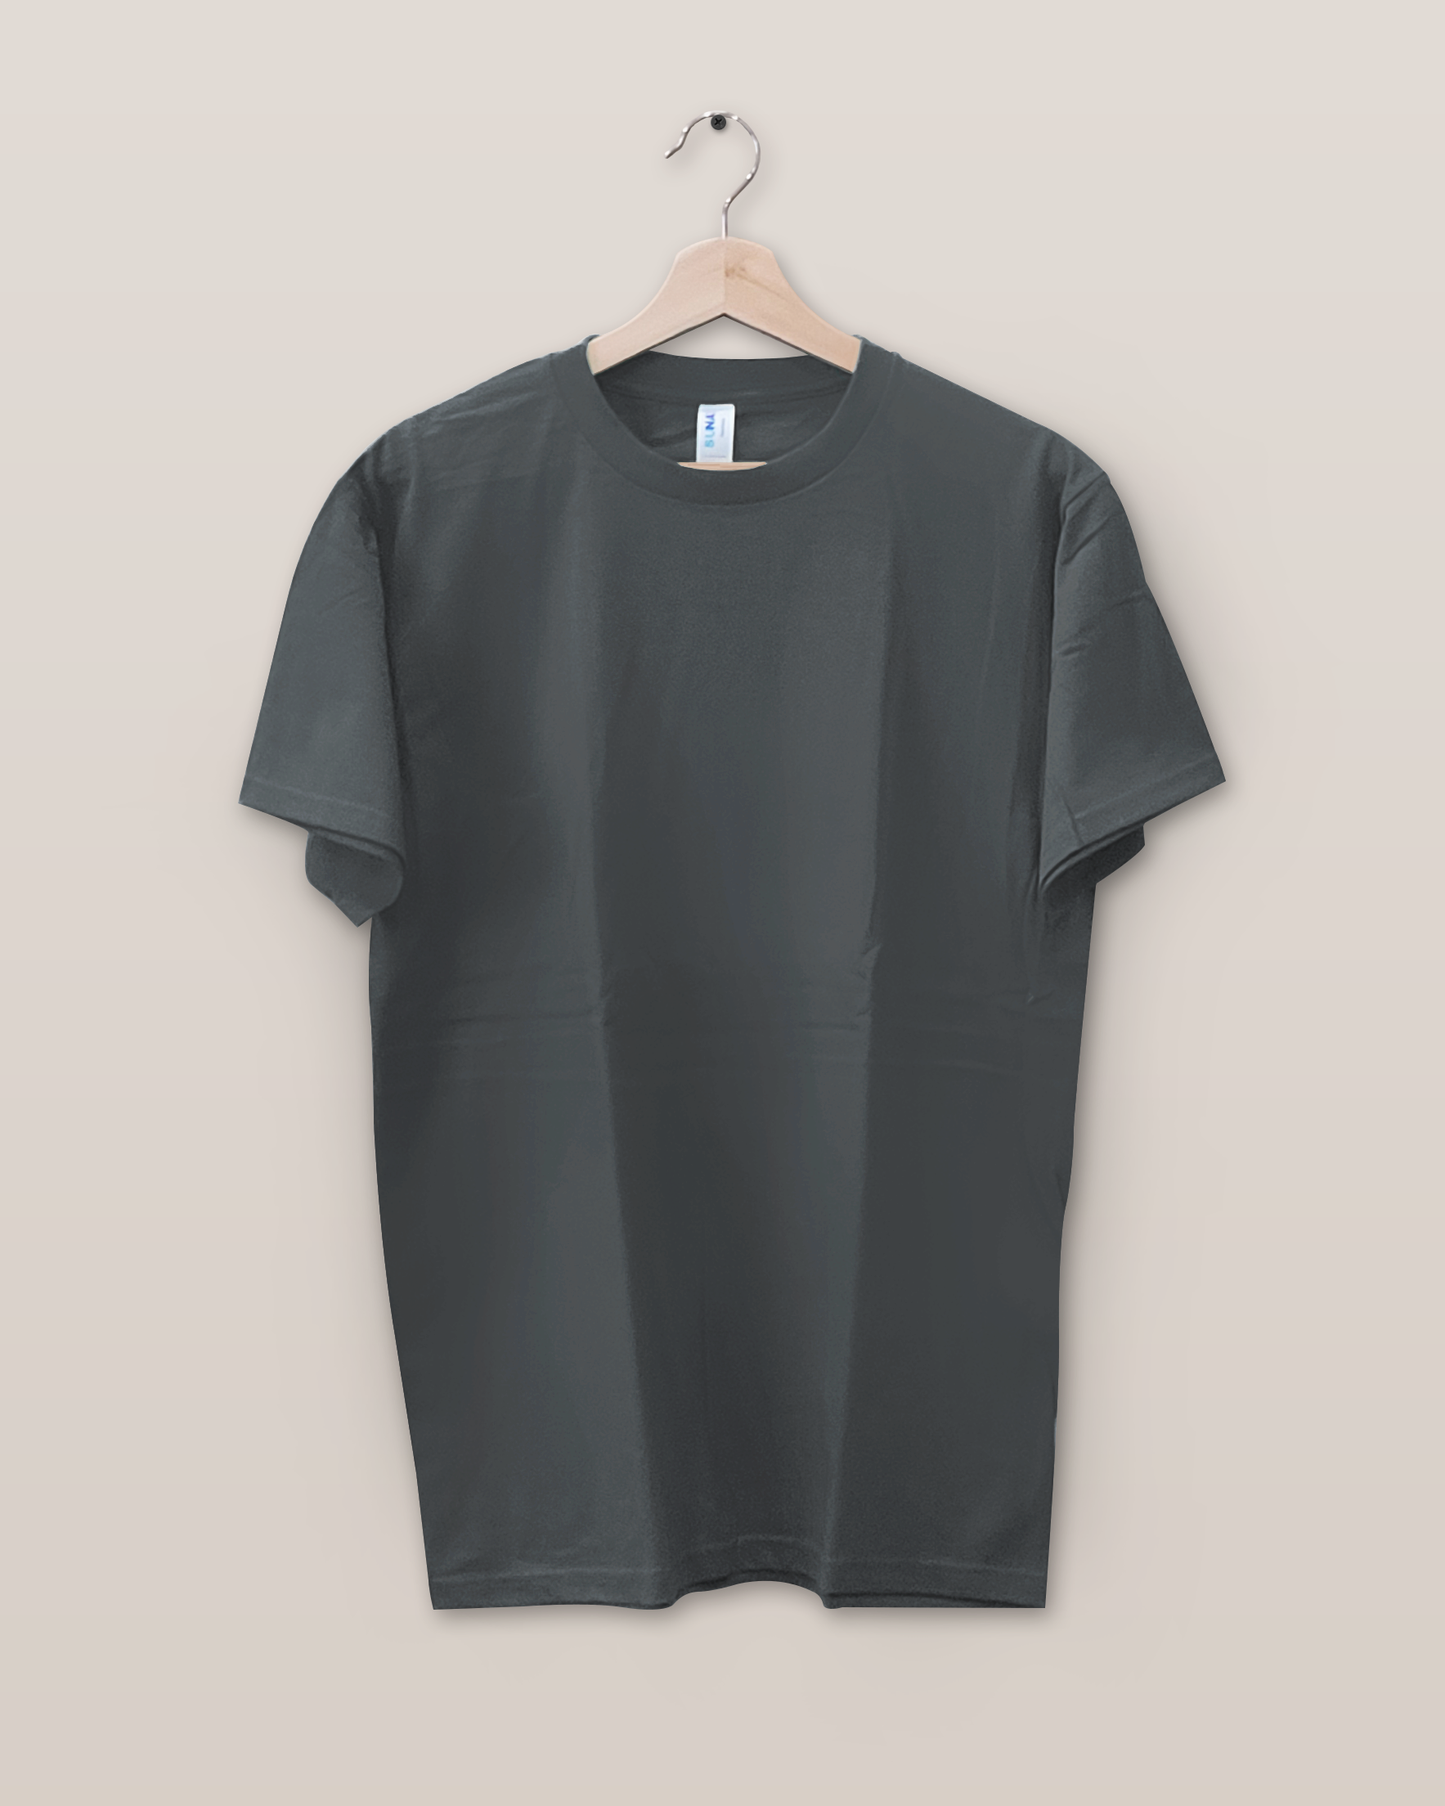 Charcoal Suna Cotton® Adult T-shirt